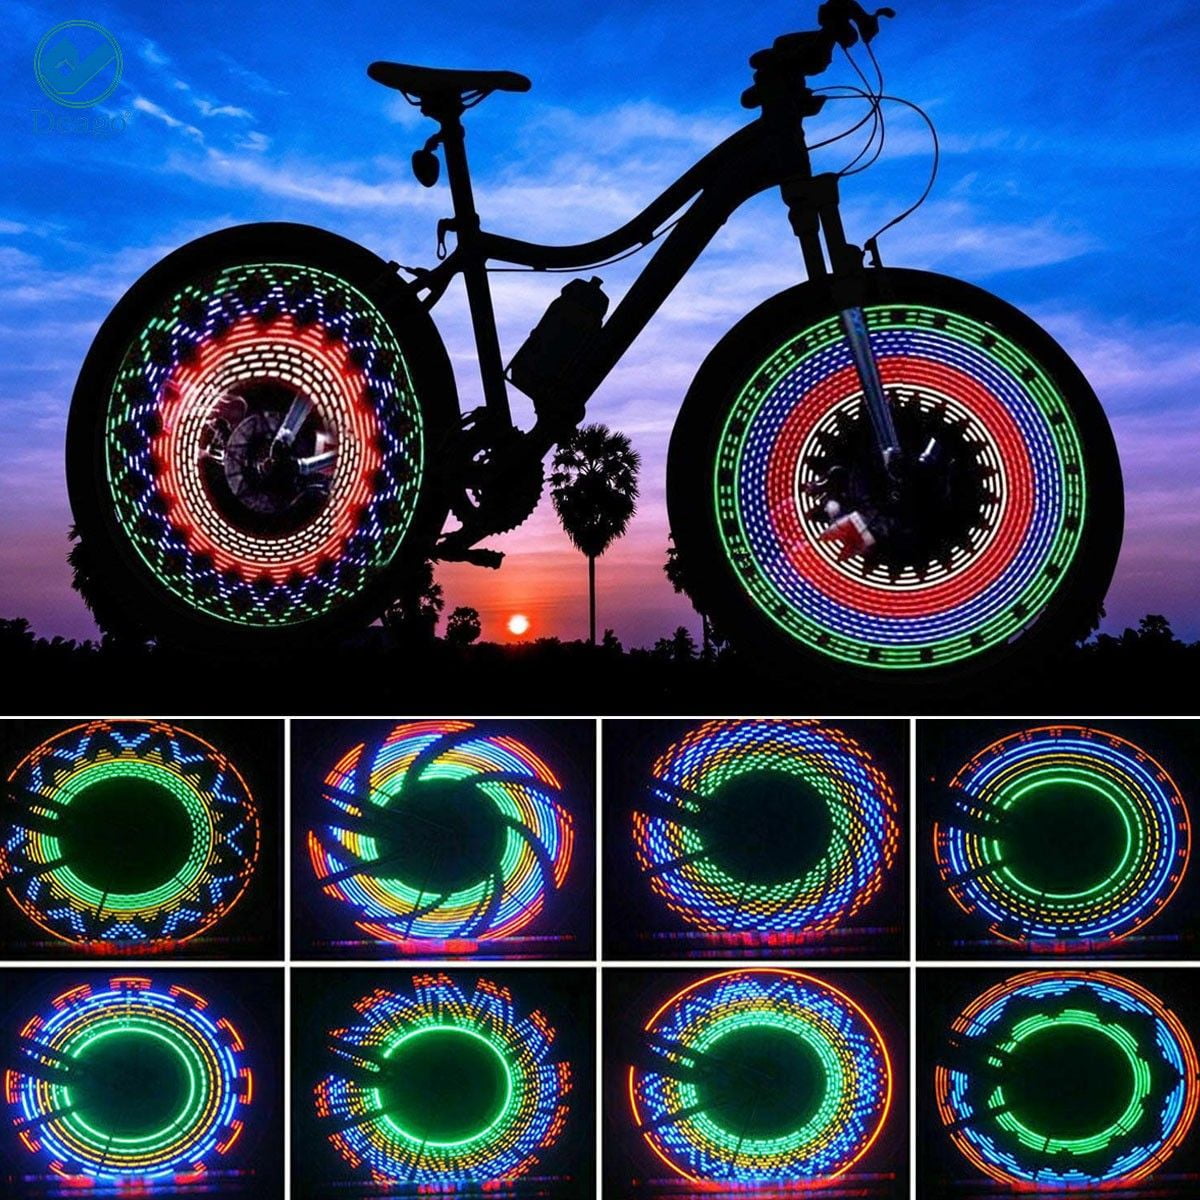 2 X Bike Bicycle Cycling Wheel Spoke Wire Tyre Bright LED Flash Light Lamp